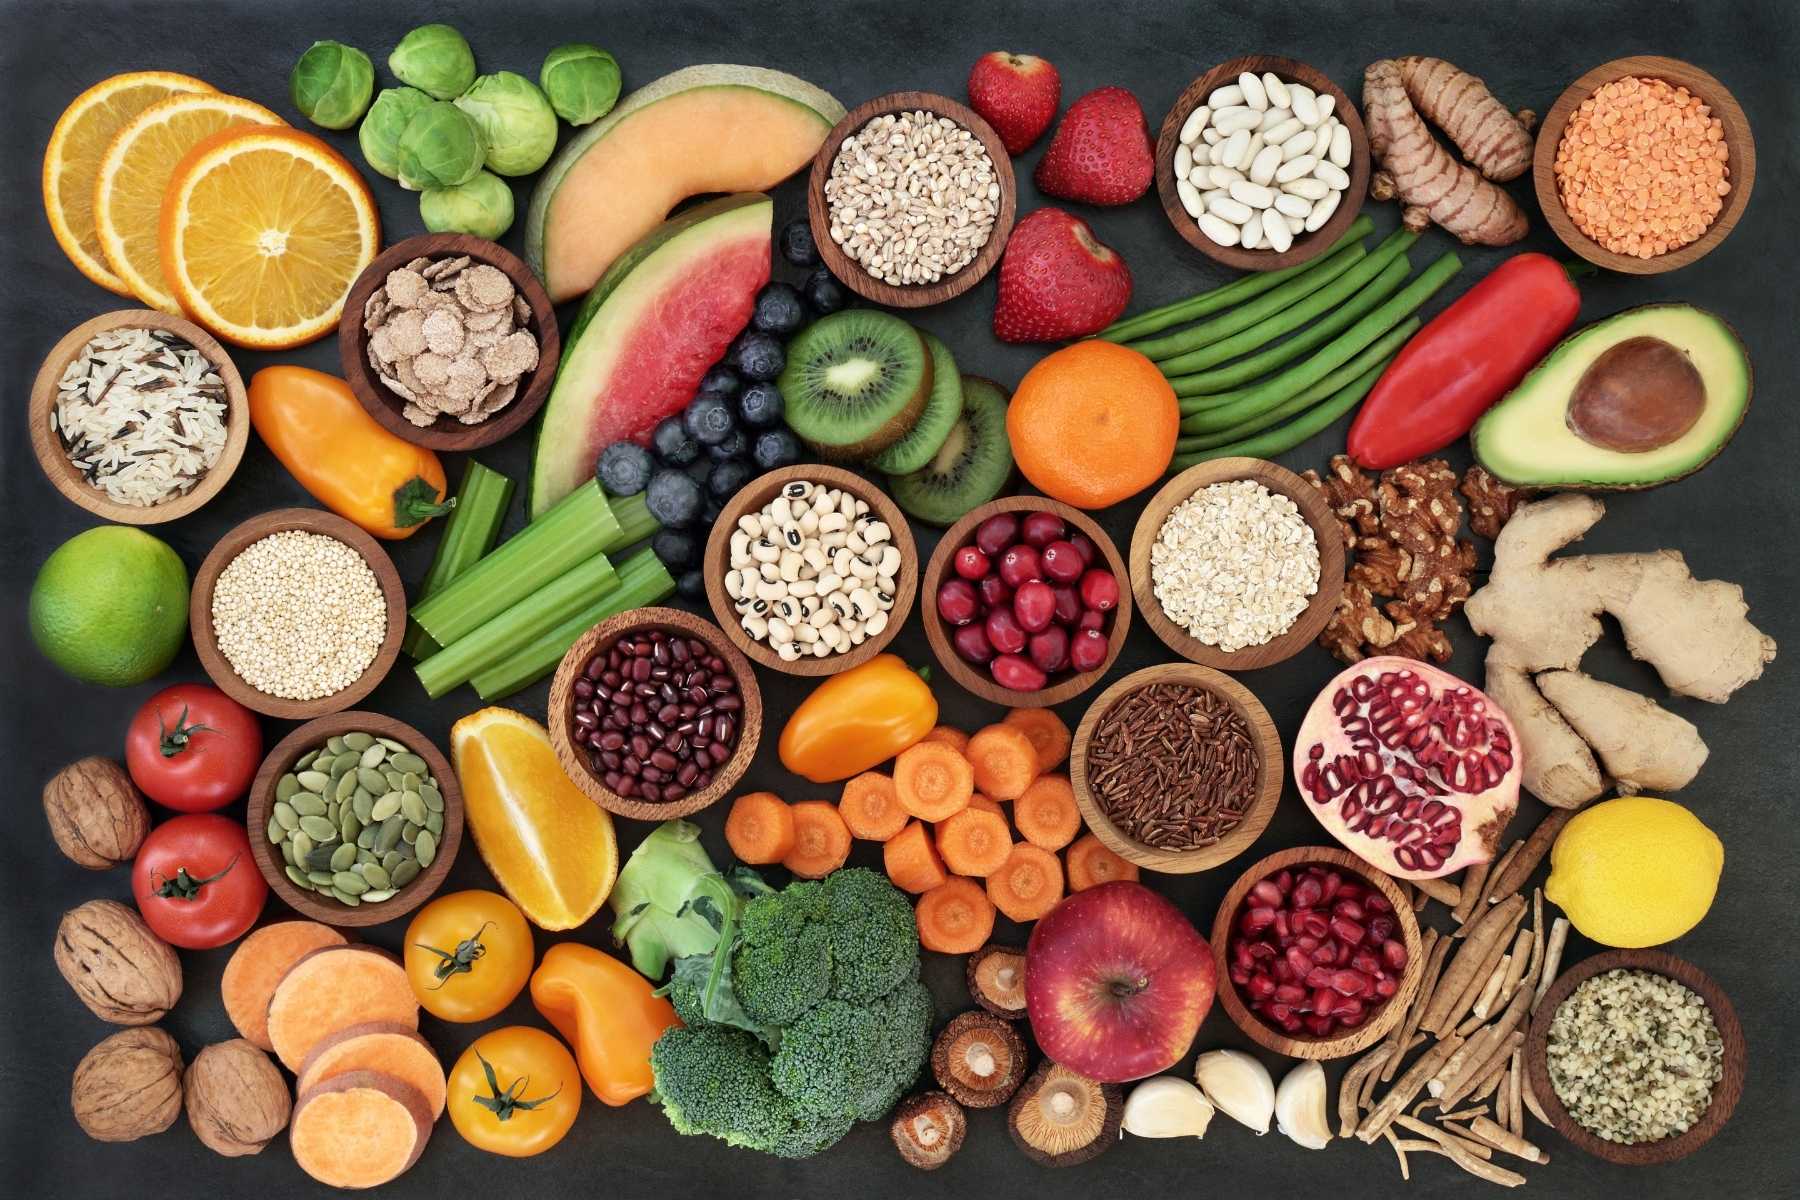 Plant-based vegan food for health